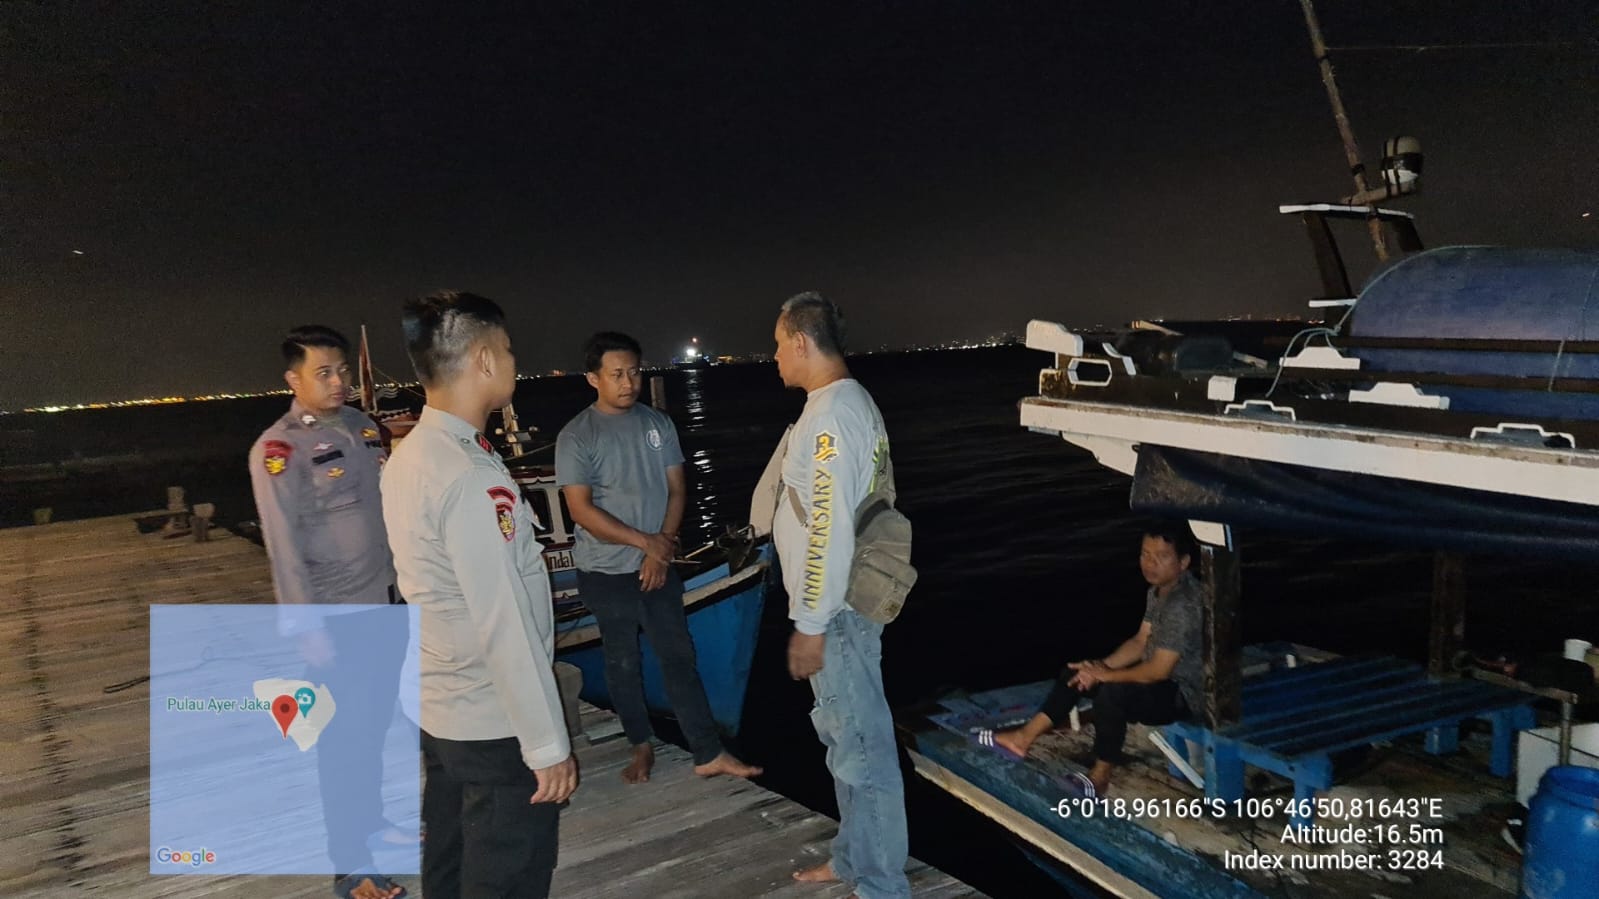 Team Patroli Satuan Polair Polres Kepulauan Seribu Menjaga Keamanan Pulau Wisata dengan Giat Patroli di Pulau Bidadari